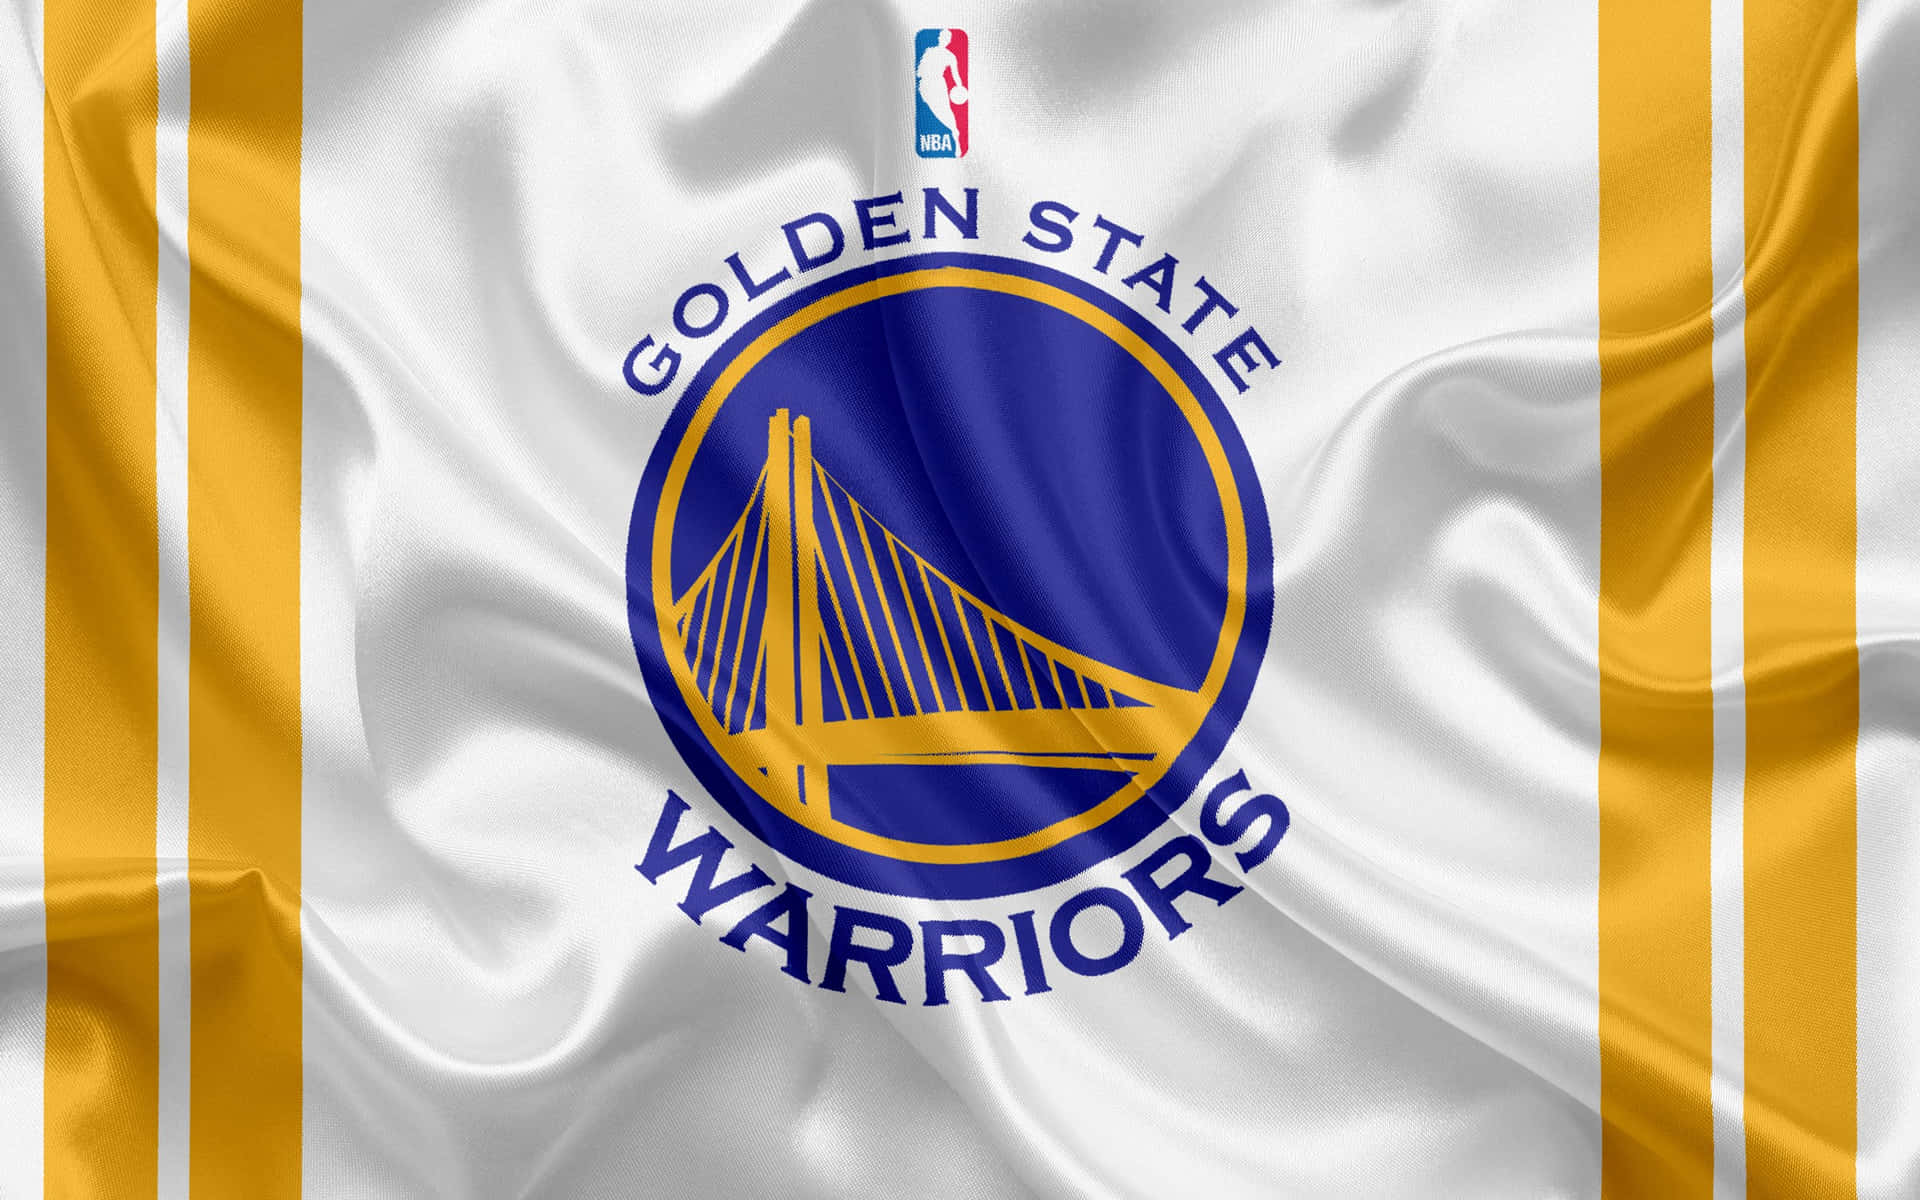 Free Golden State Warriors Logo Wallpaper Downloads, Golden State Warriors Logo Wallpaper for FREE